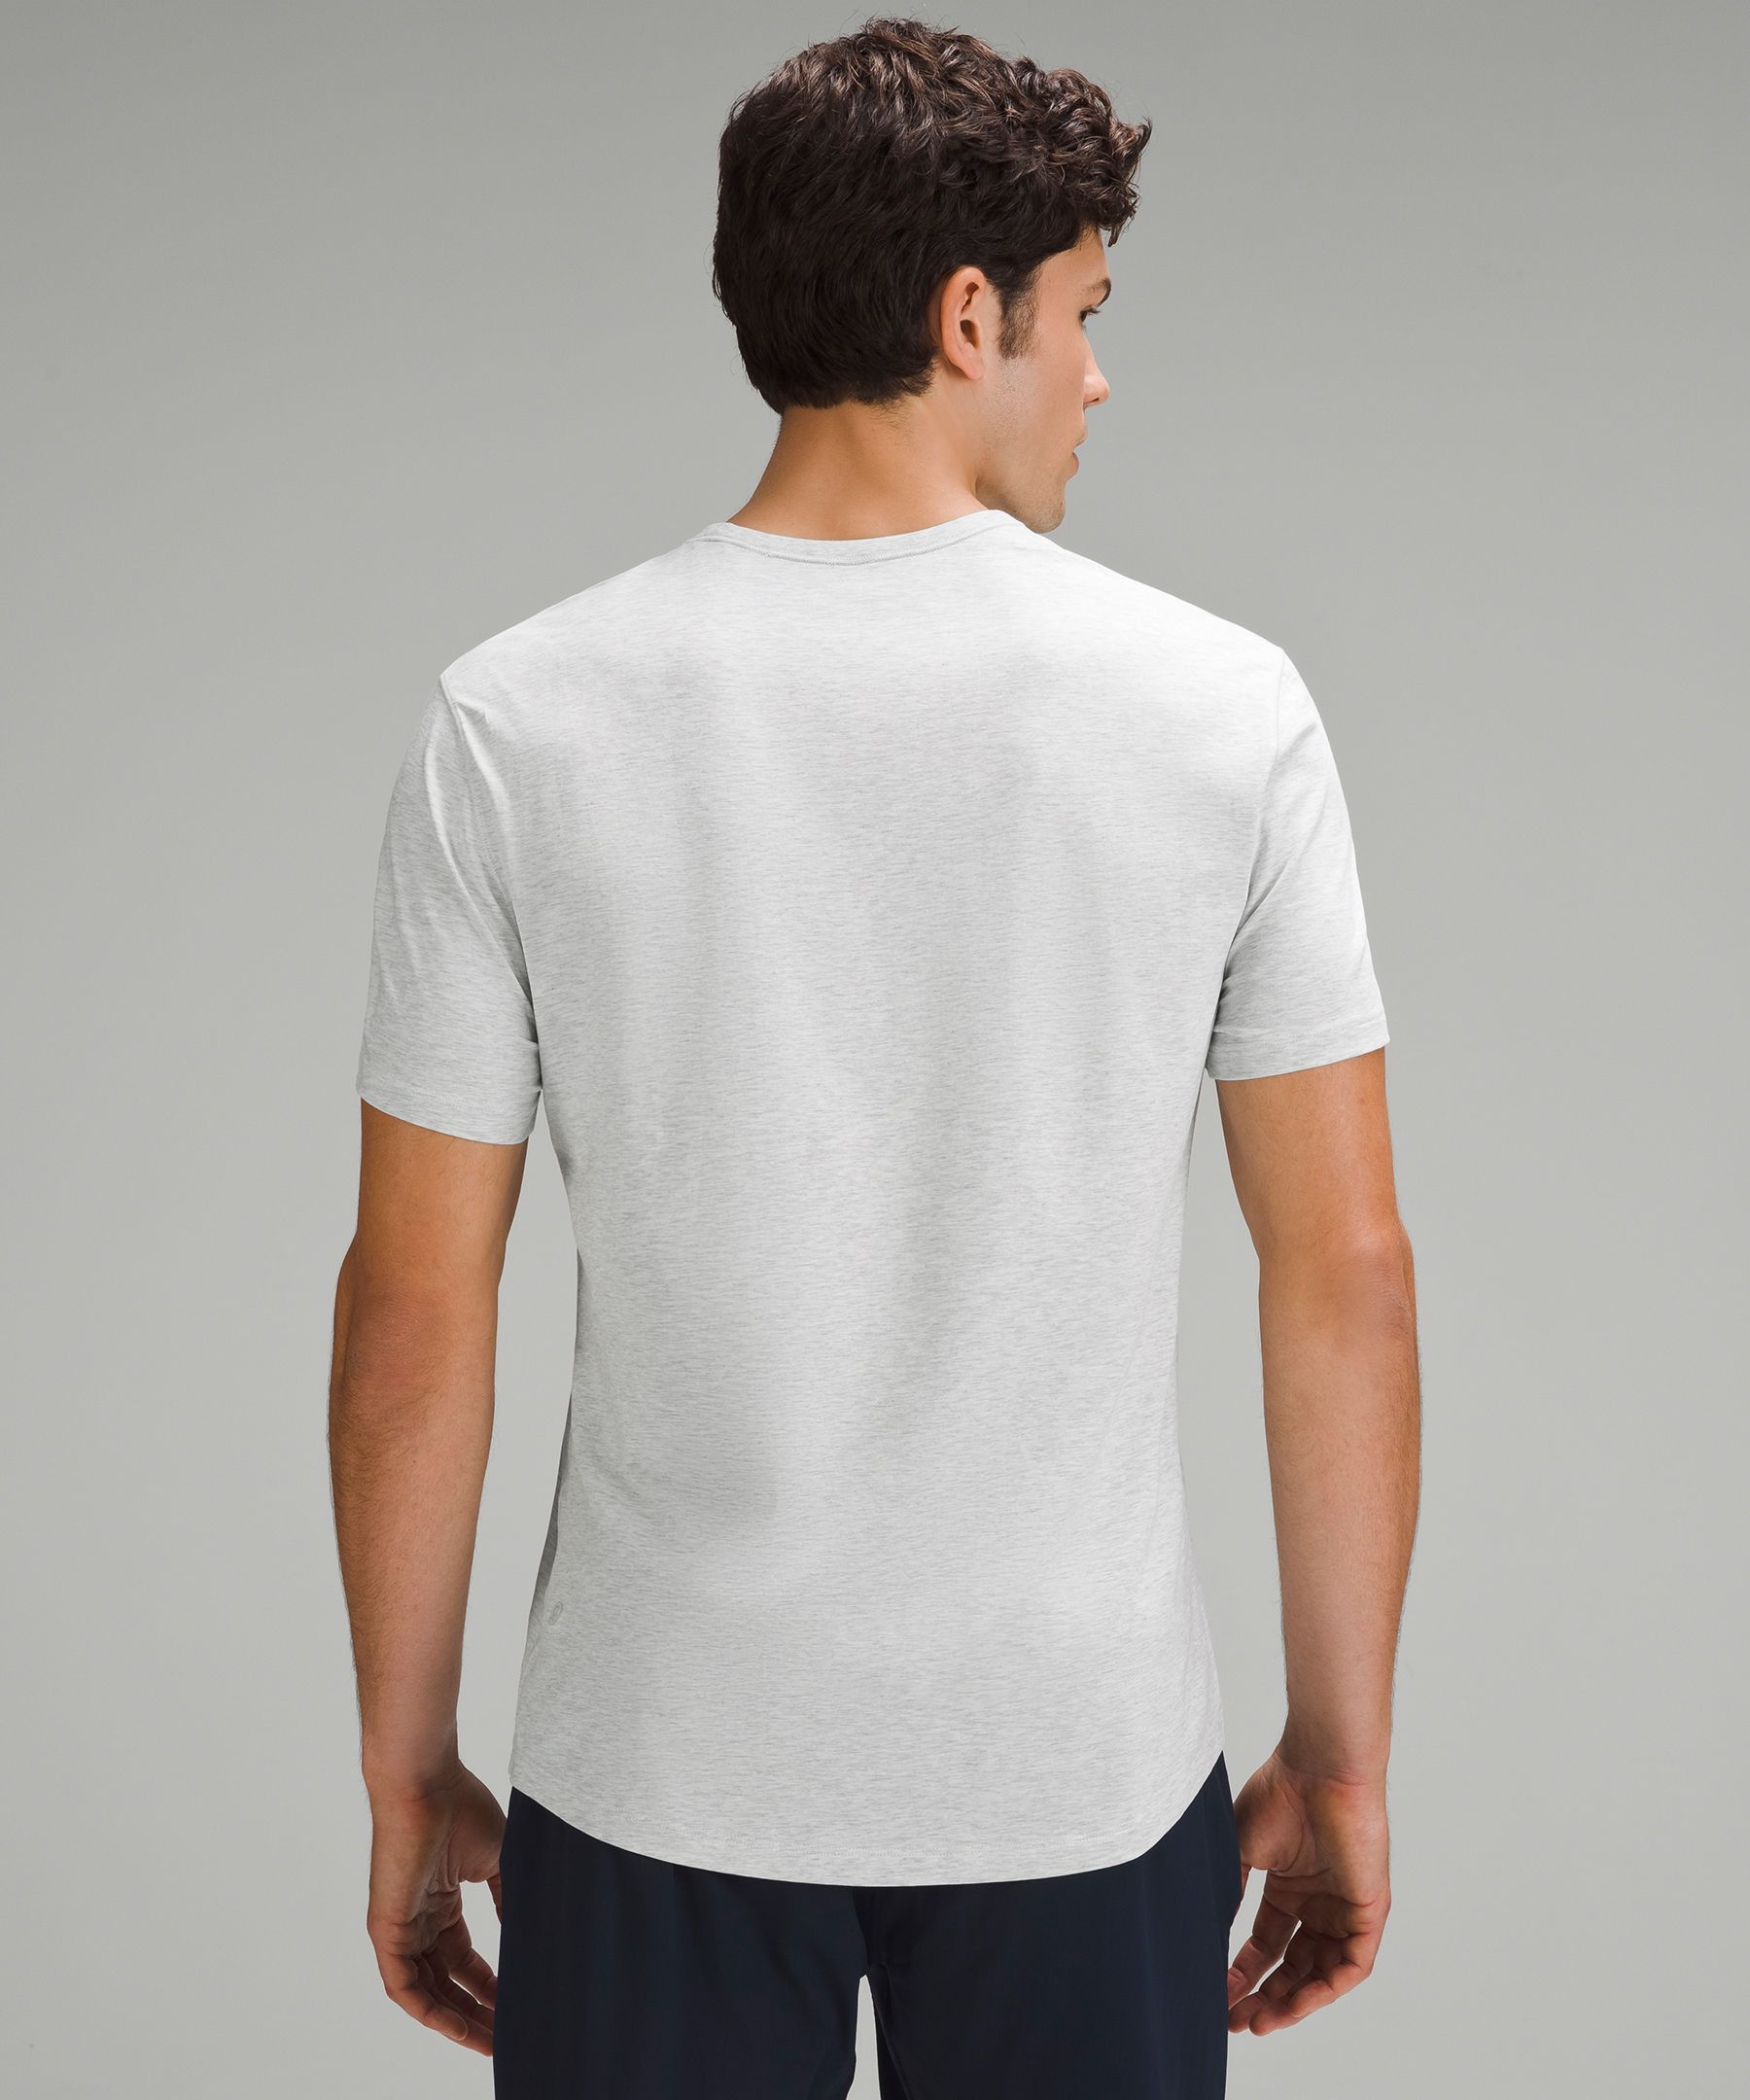 5 Year Basic T-Shirt *5 Pack, Men's Short Sleeve Shirts & Tee's